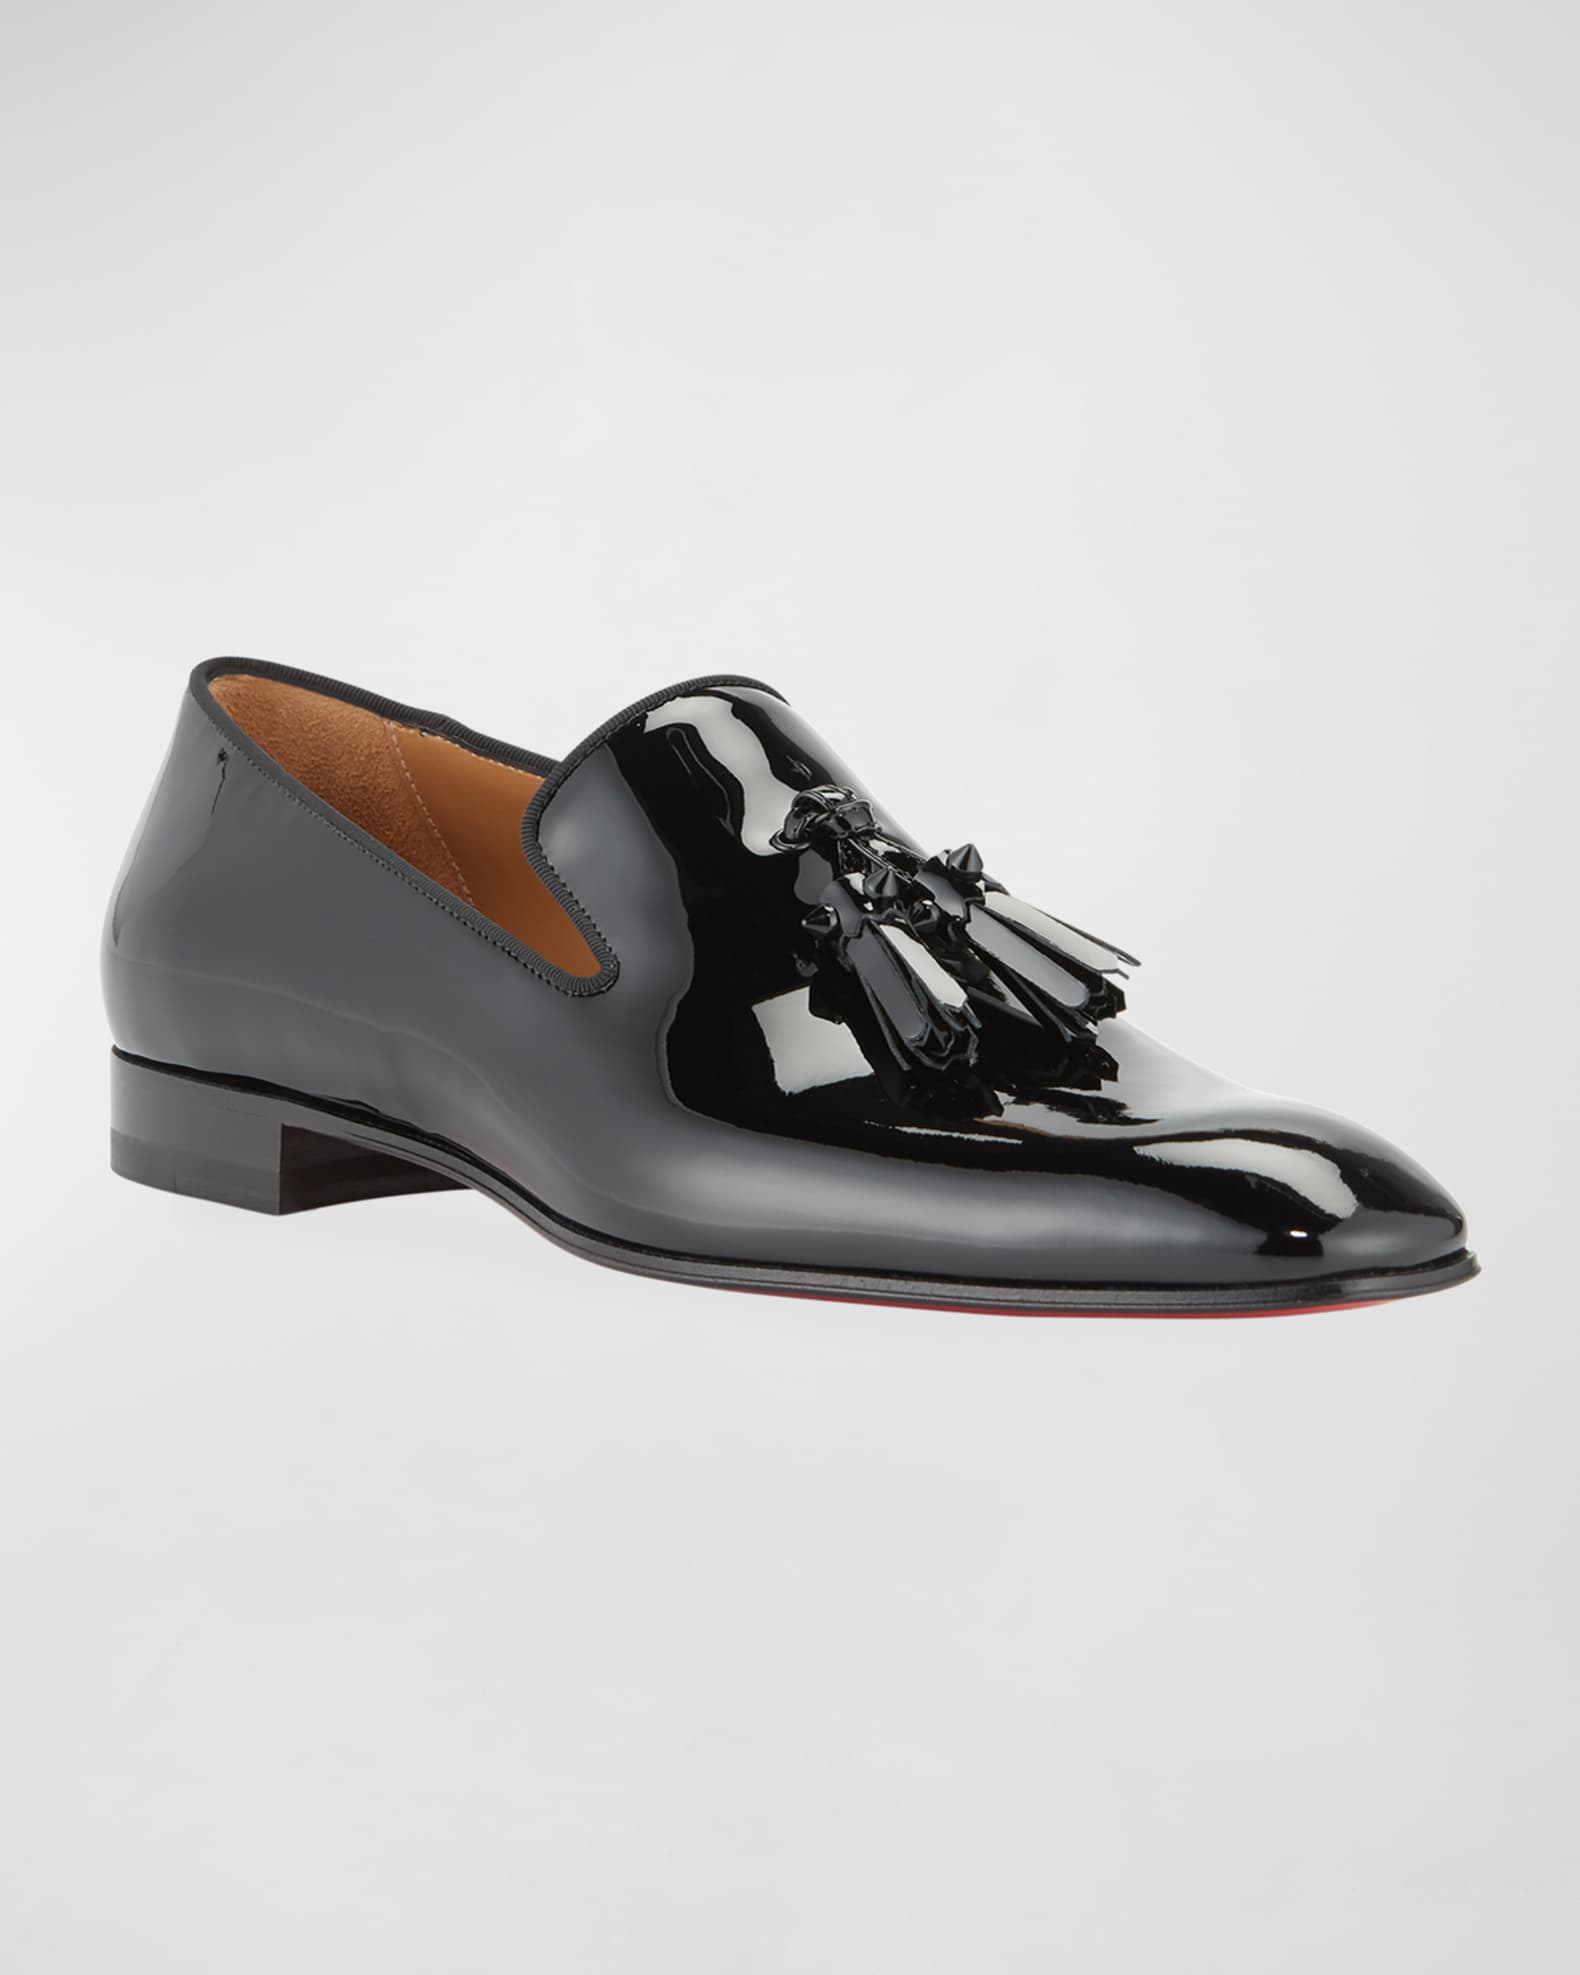 Men's Dandelion Patent Leather Tassel Loafers